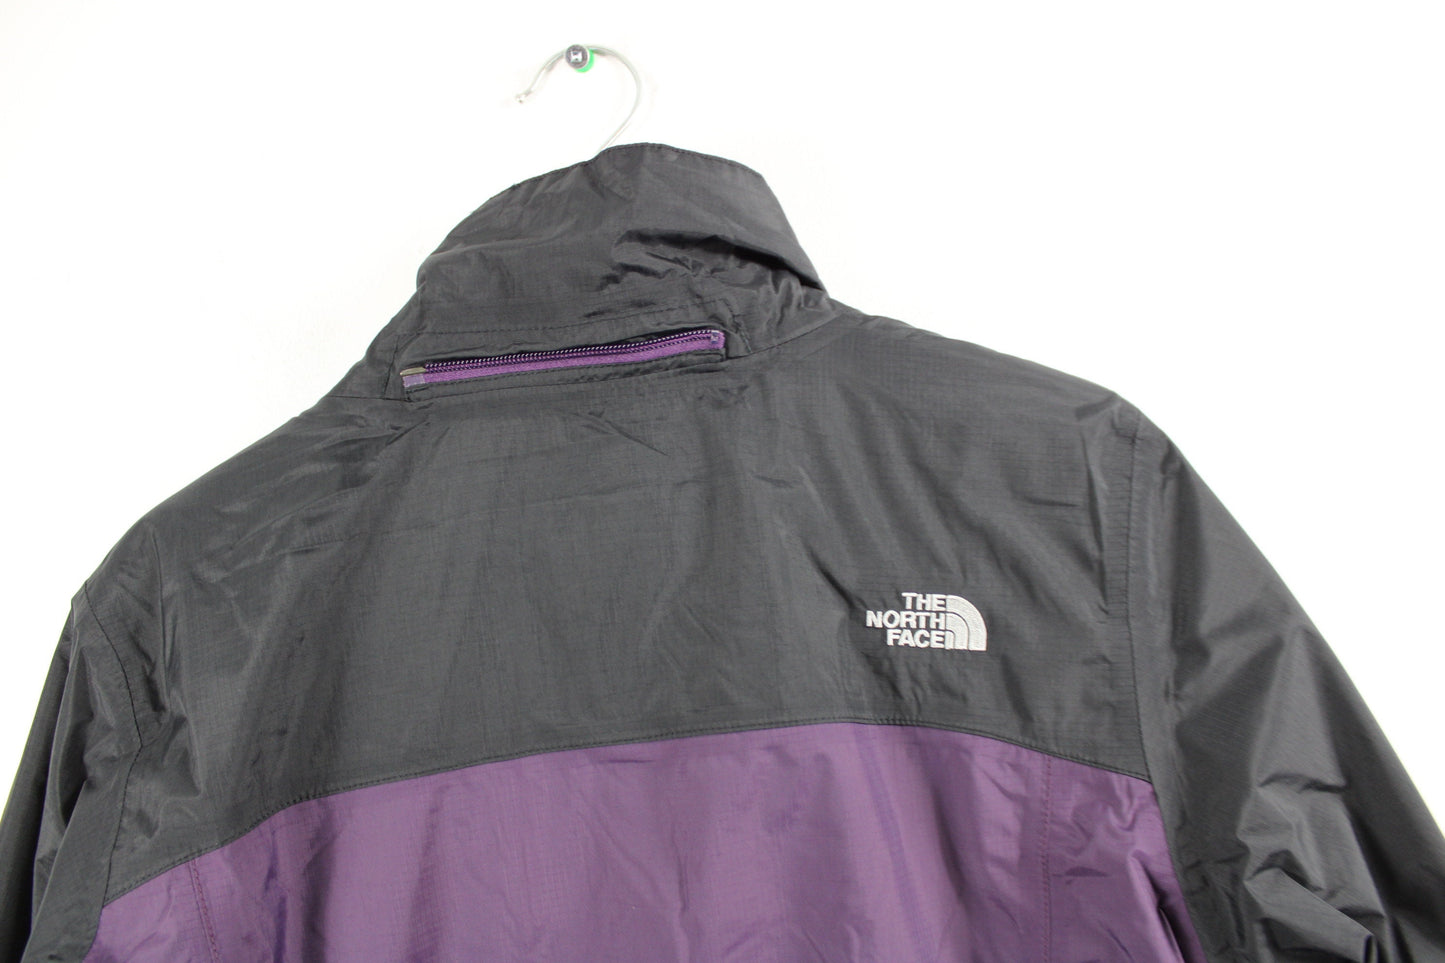 North-Face Jacket / Purple Shell Coat With Fleece Liner / 90s Vintage Hip-Hop Clothing / Streetwear / Women's TNF